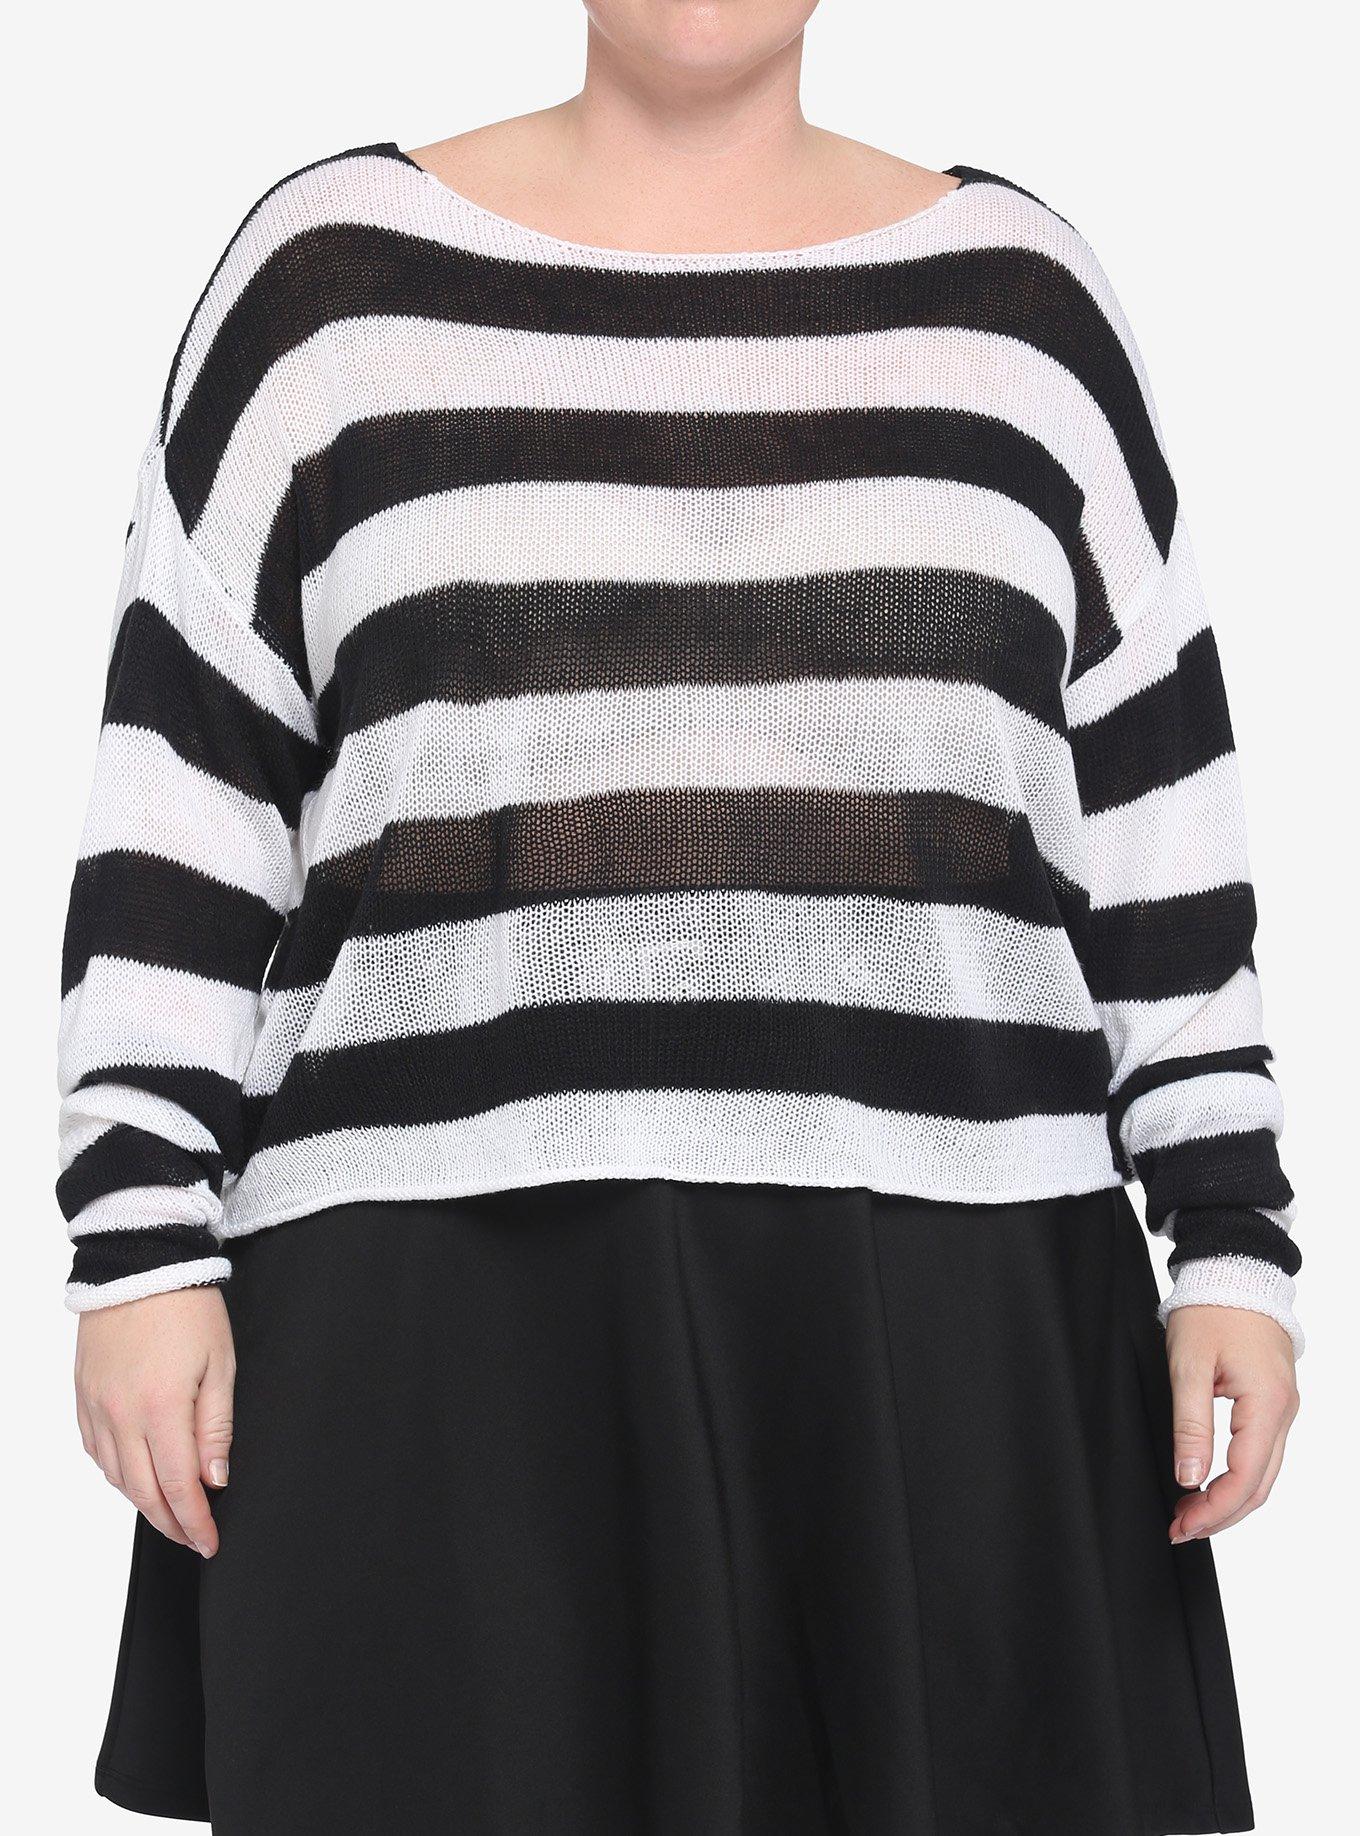 White & Black Stripe Girls Crop Sweater Plus Size, STRIPES, hi-res